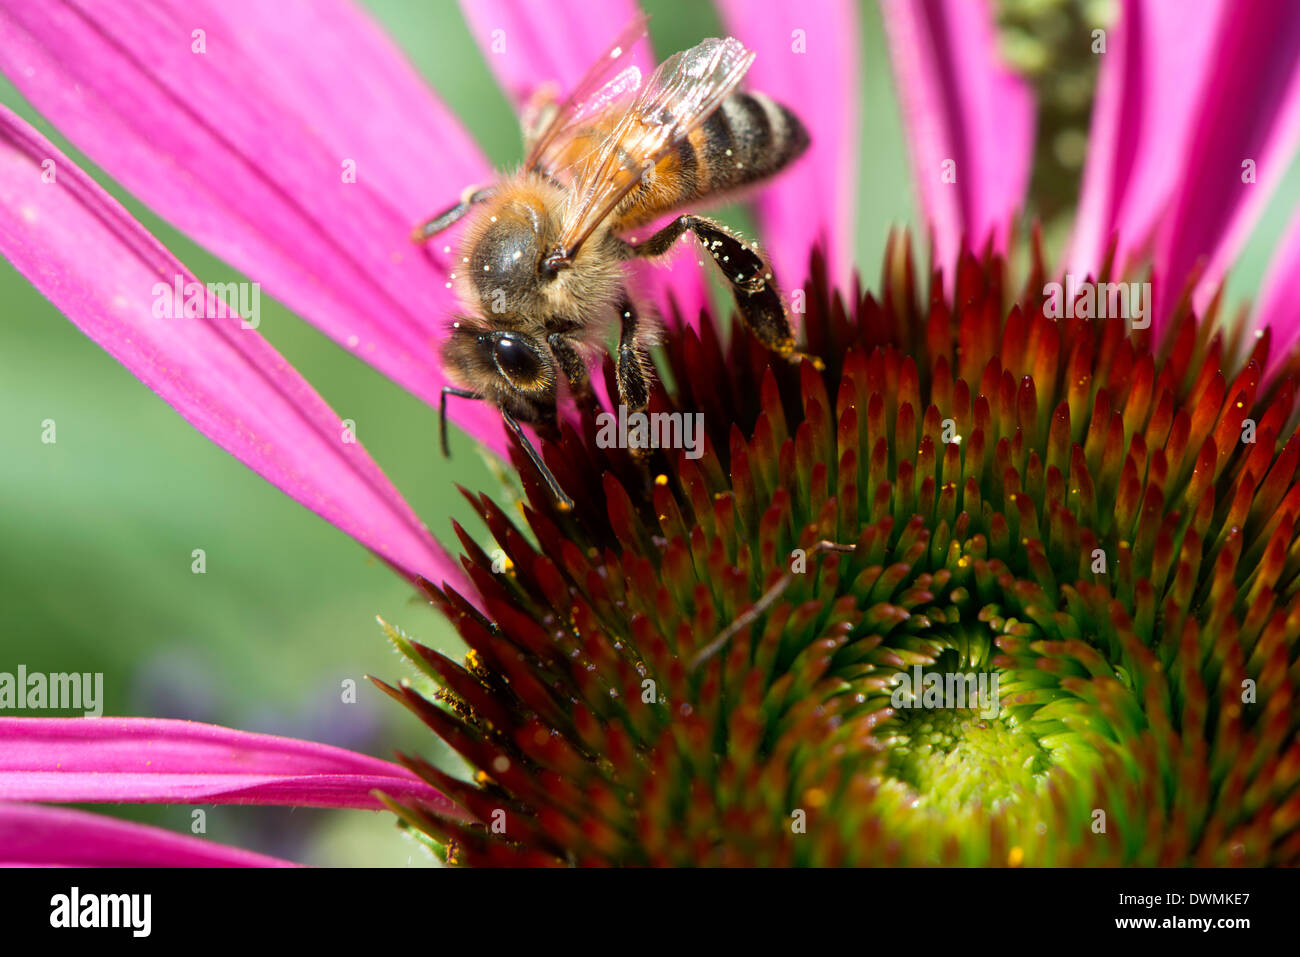 Abeja de miel, Apis mellifera alimentándose de néctar de flores, Londres, Reino Unido. Foto de stock